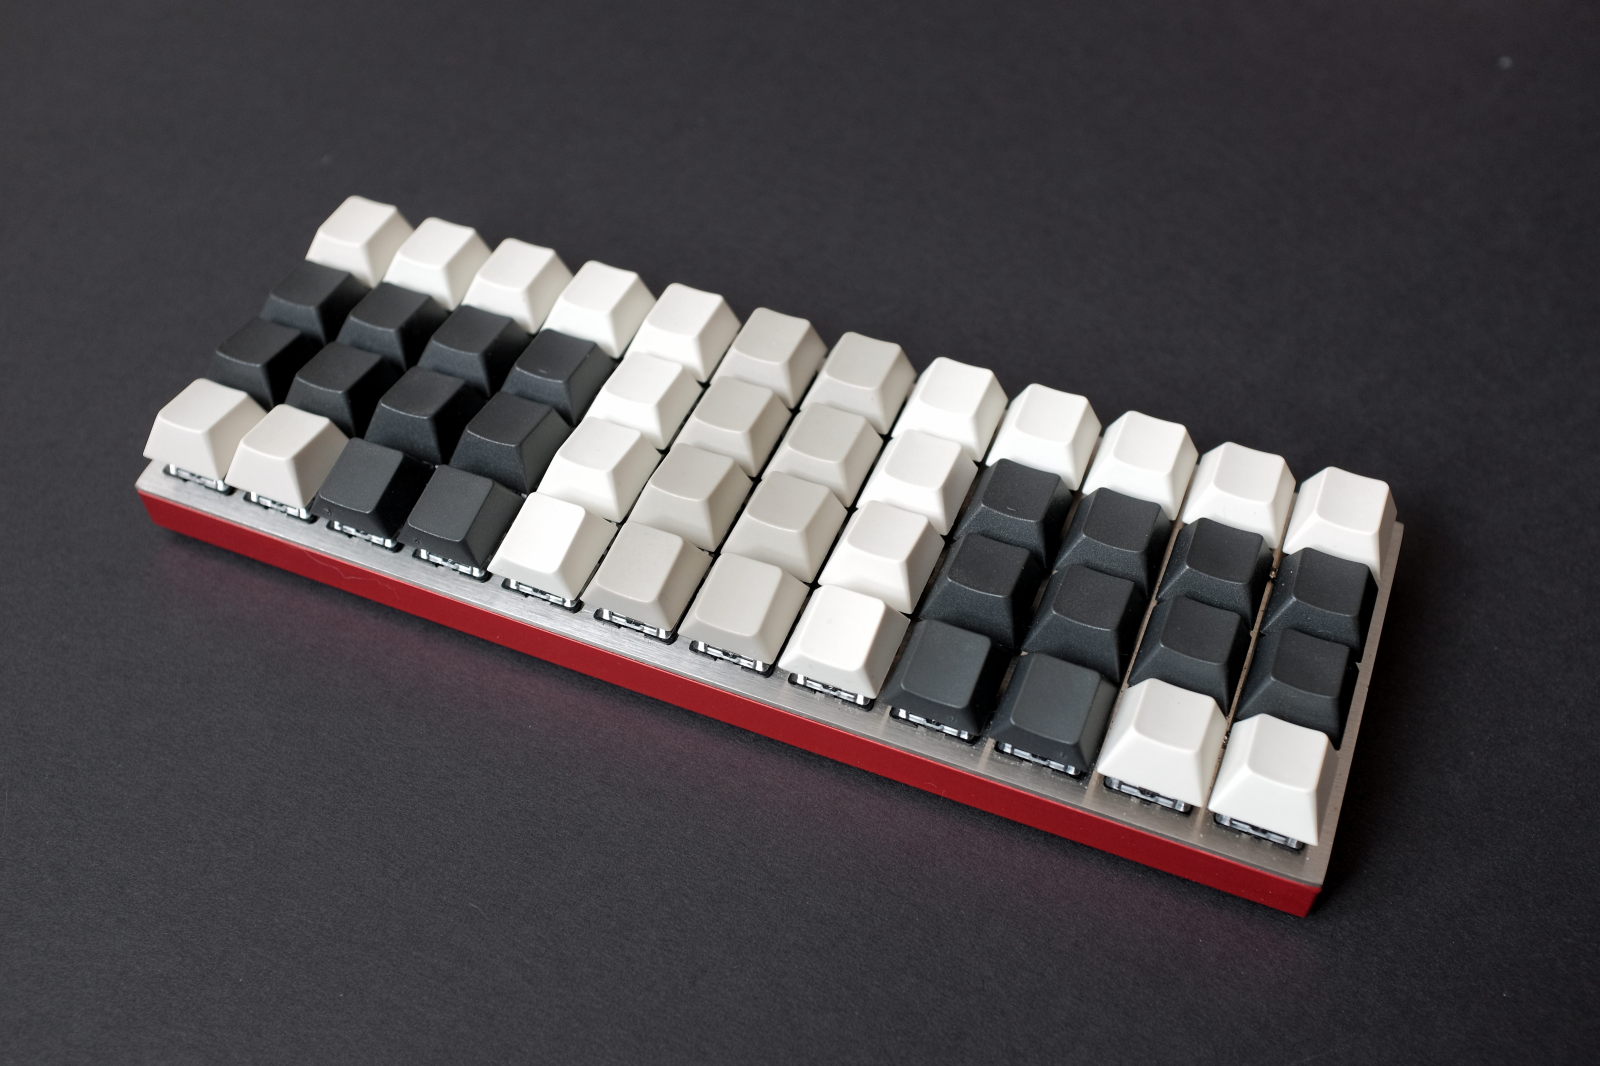 Split Planck with cherry profile keys